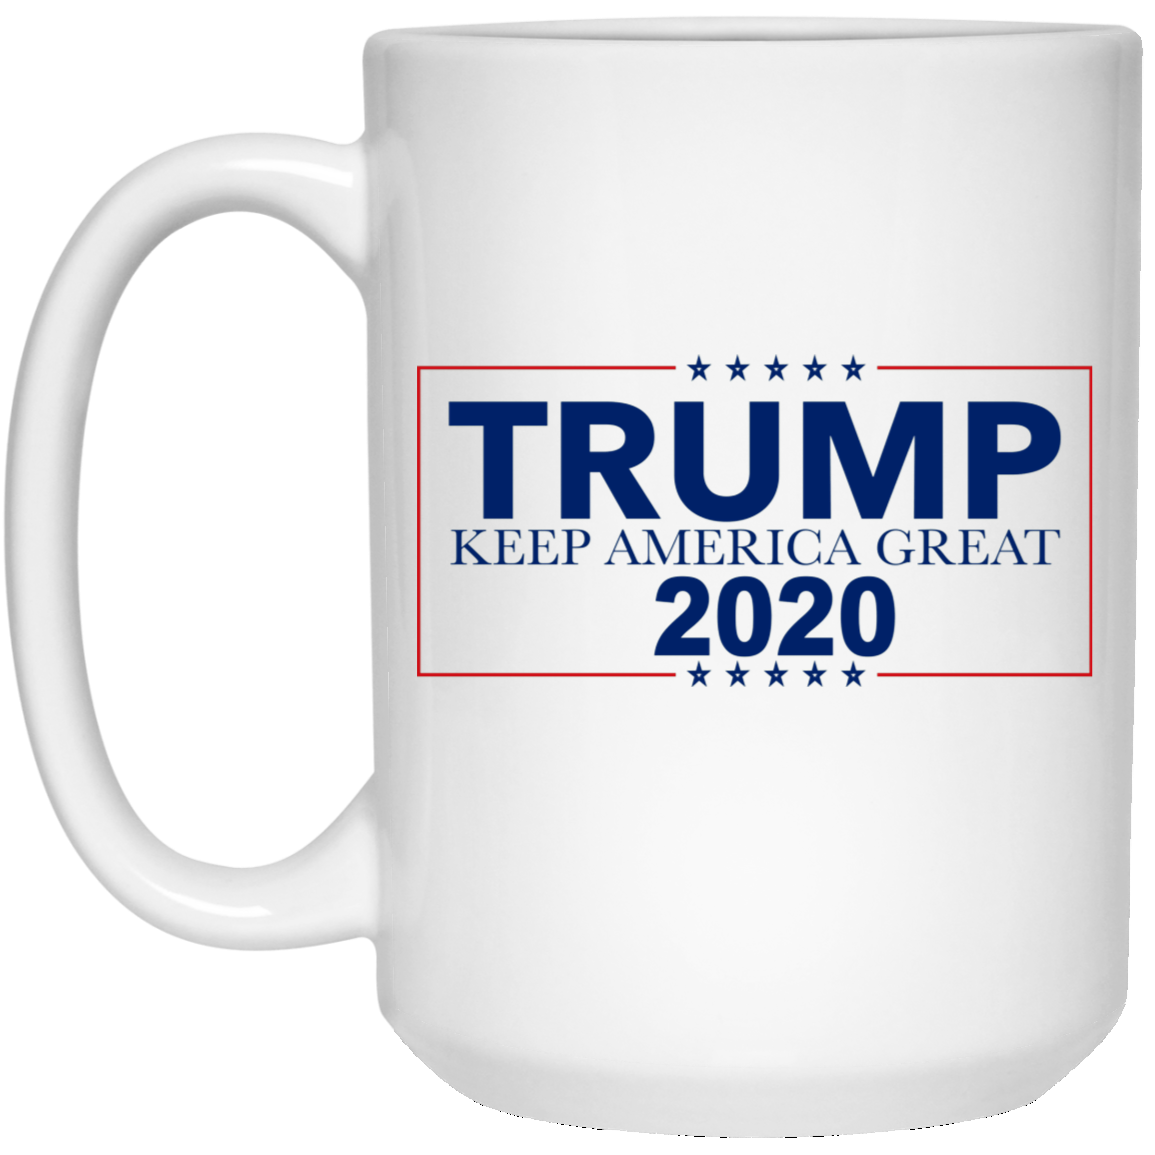 Keep America Great 2020 Slogan 15 oz. White Mug - Trumpshop.net